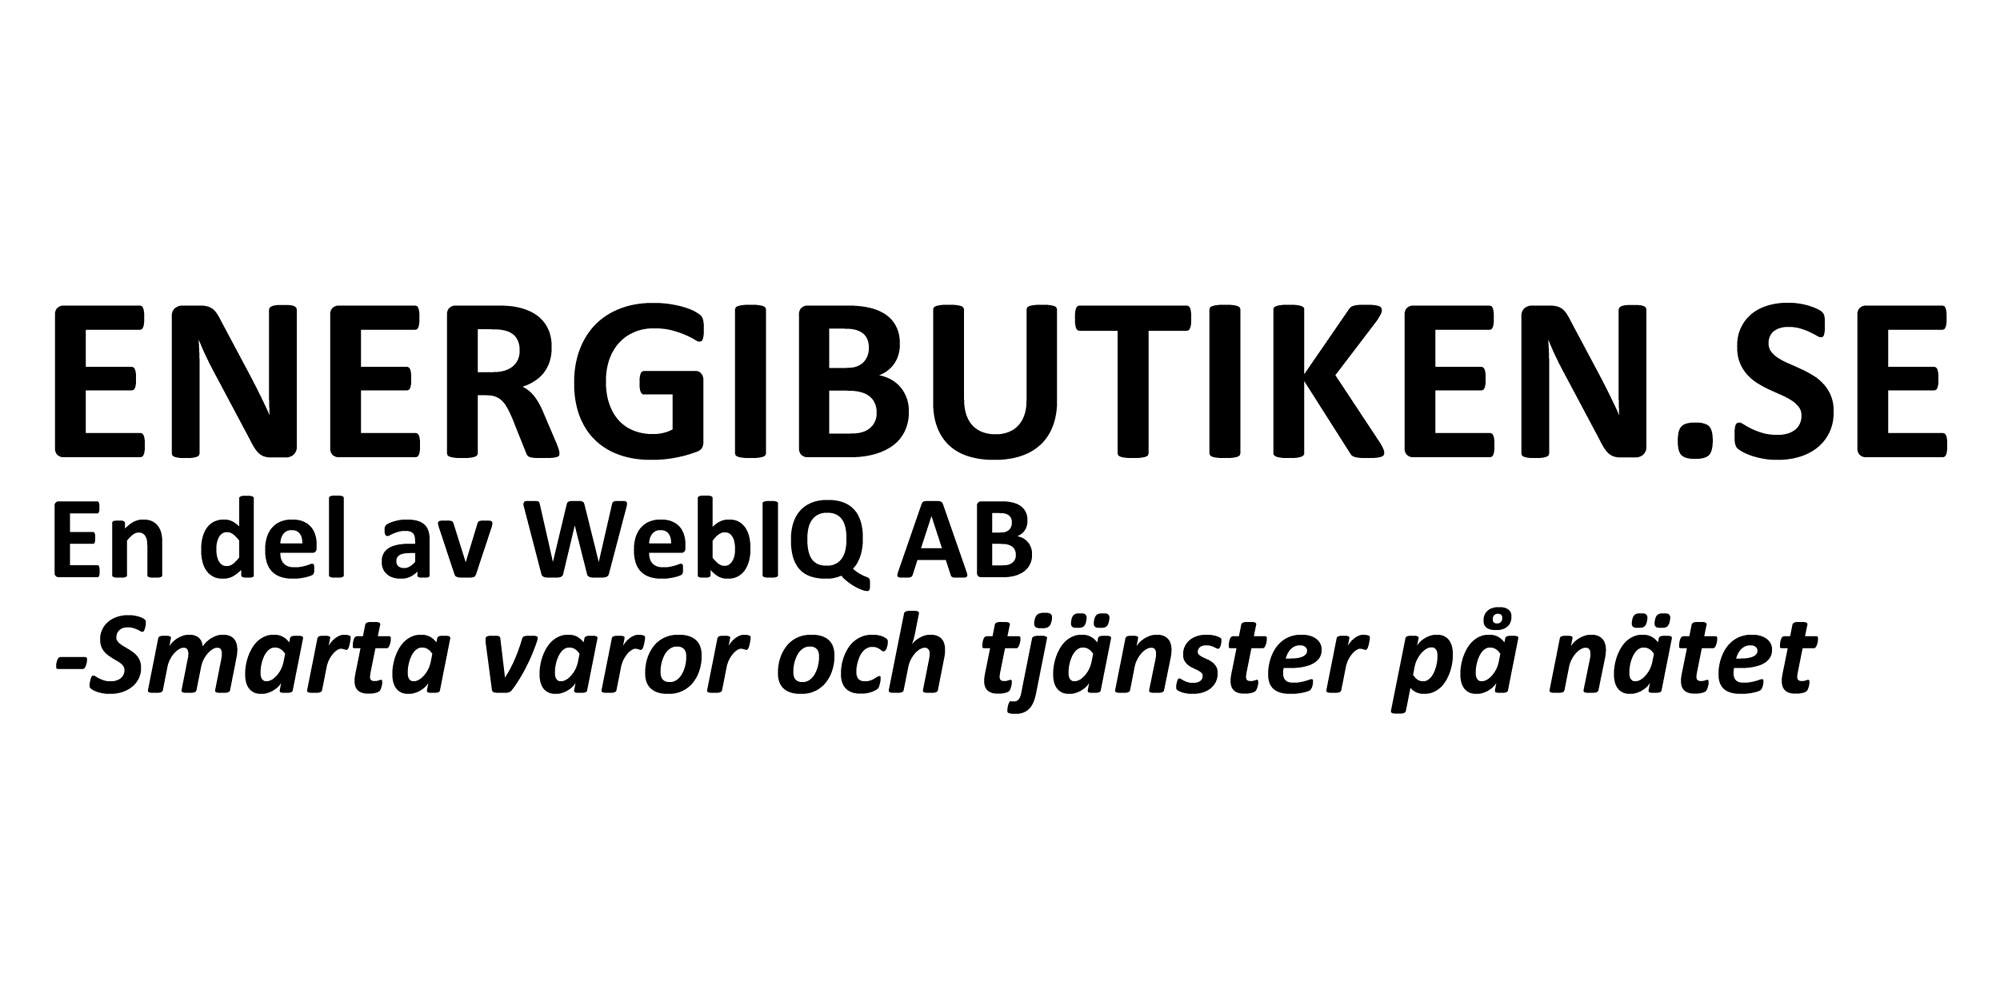 Energibutiken, WebIQ AB